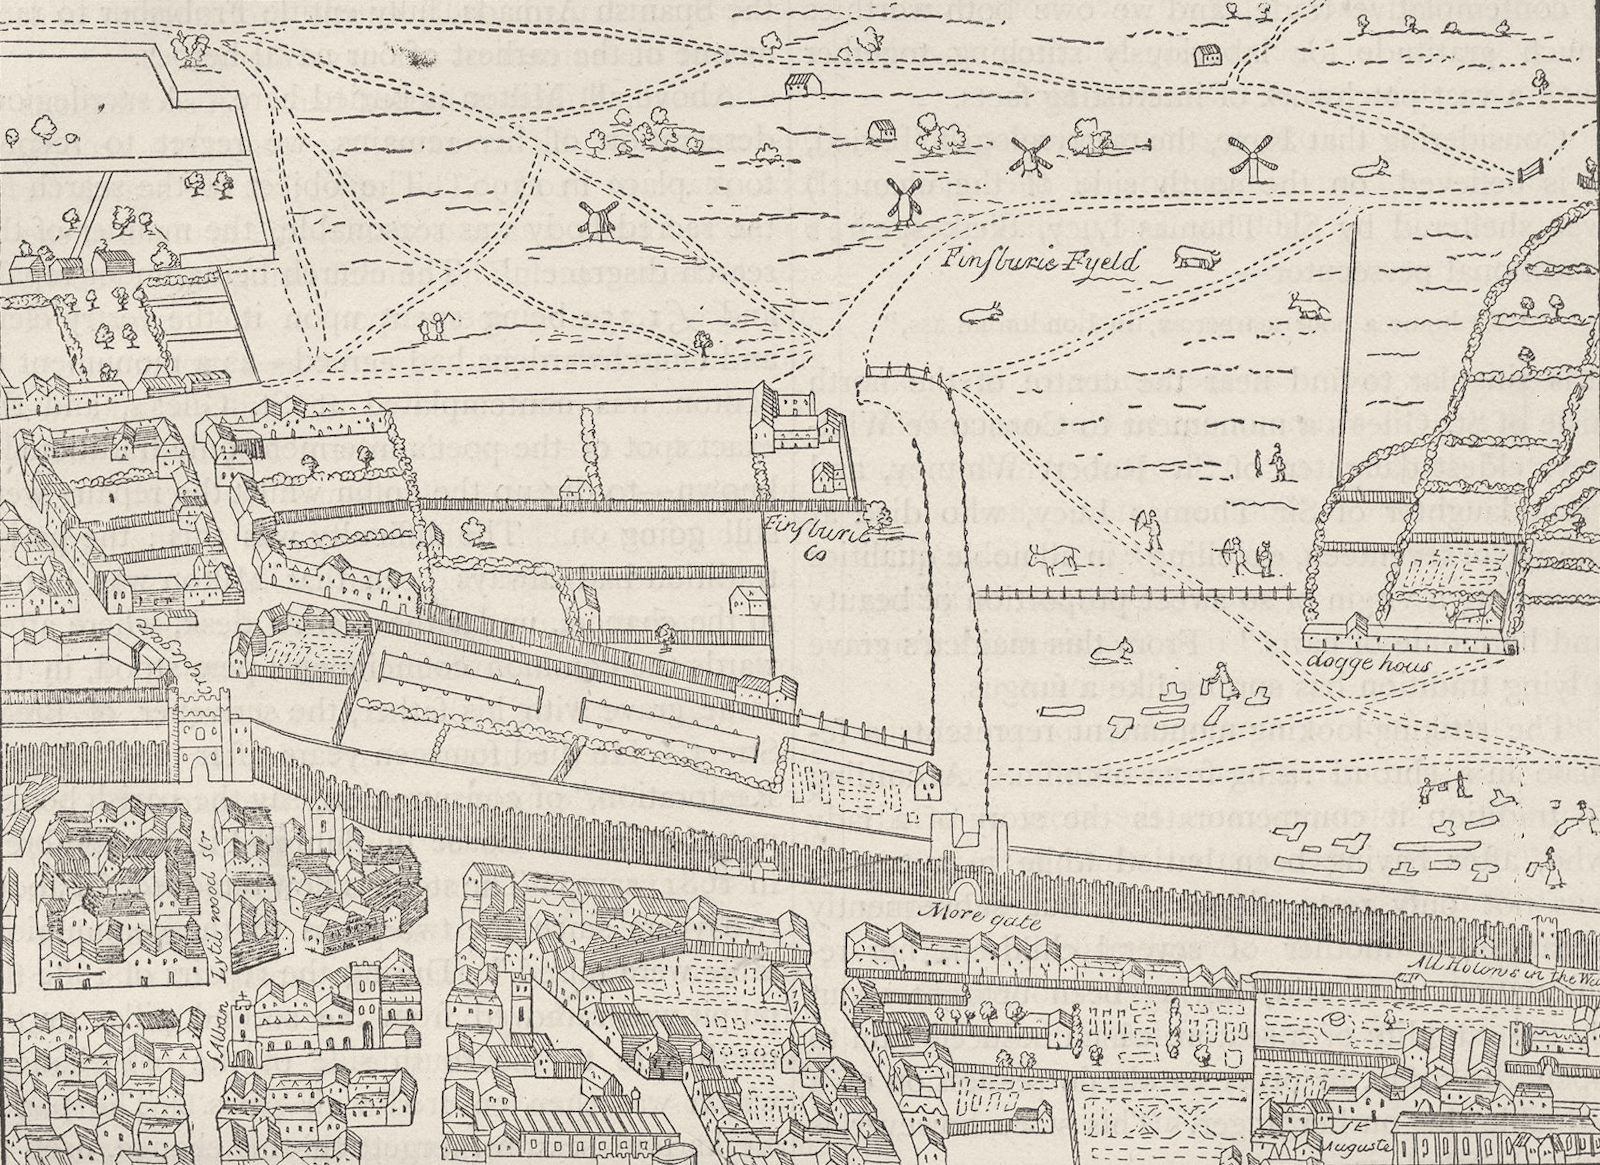 CRIPPLEGATE. Cripplegate and neighbourhood (from Aggas's map). London c1880